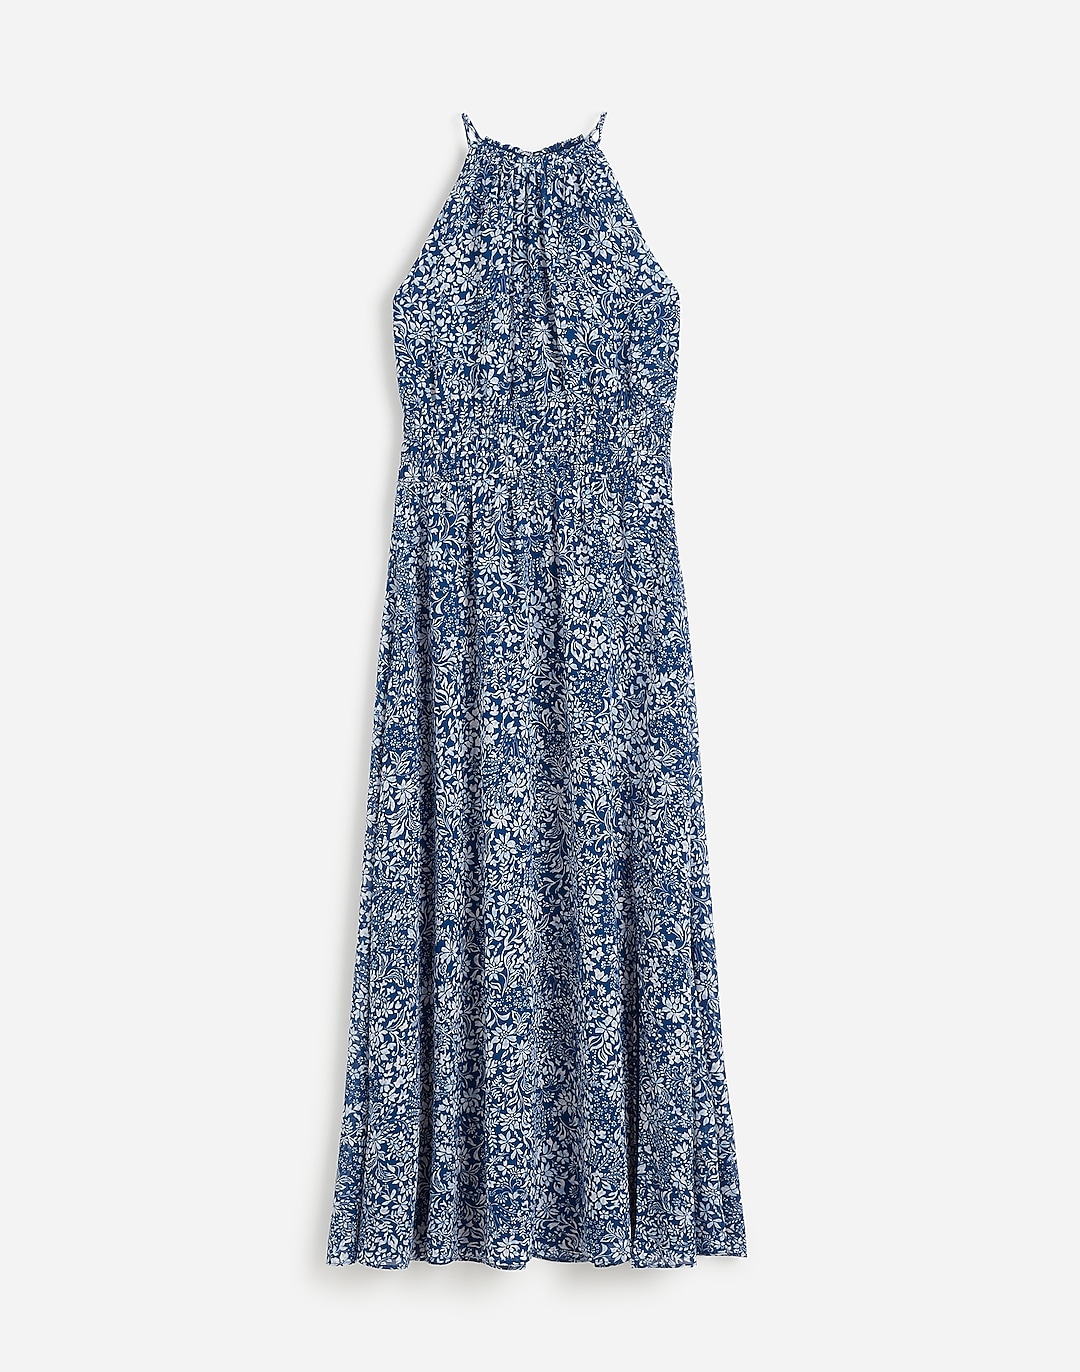 Smocked Halter Midi Dress in Floral | Madewell